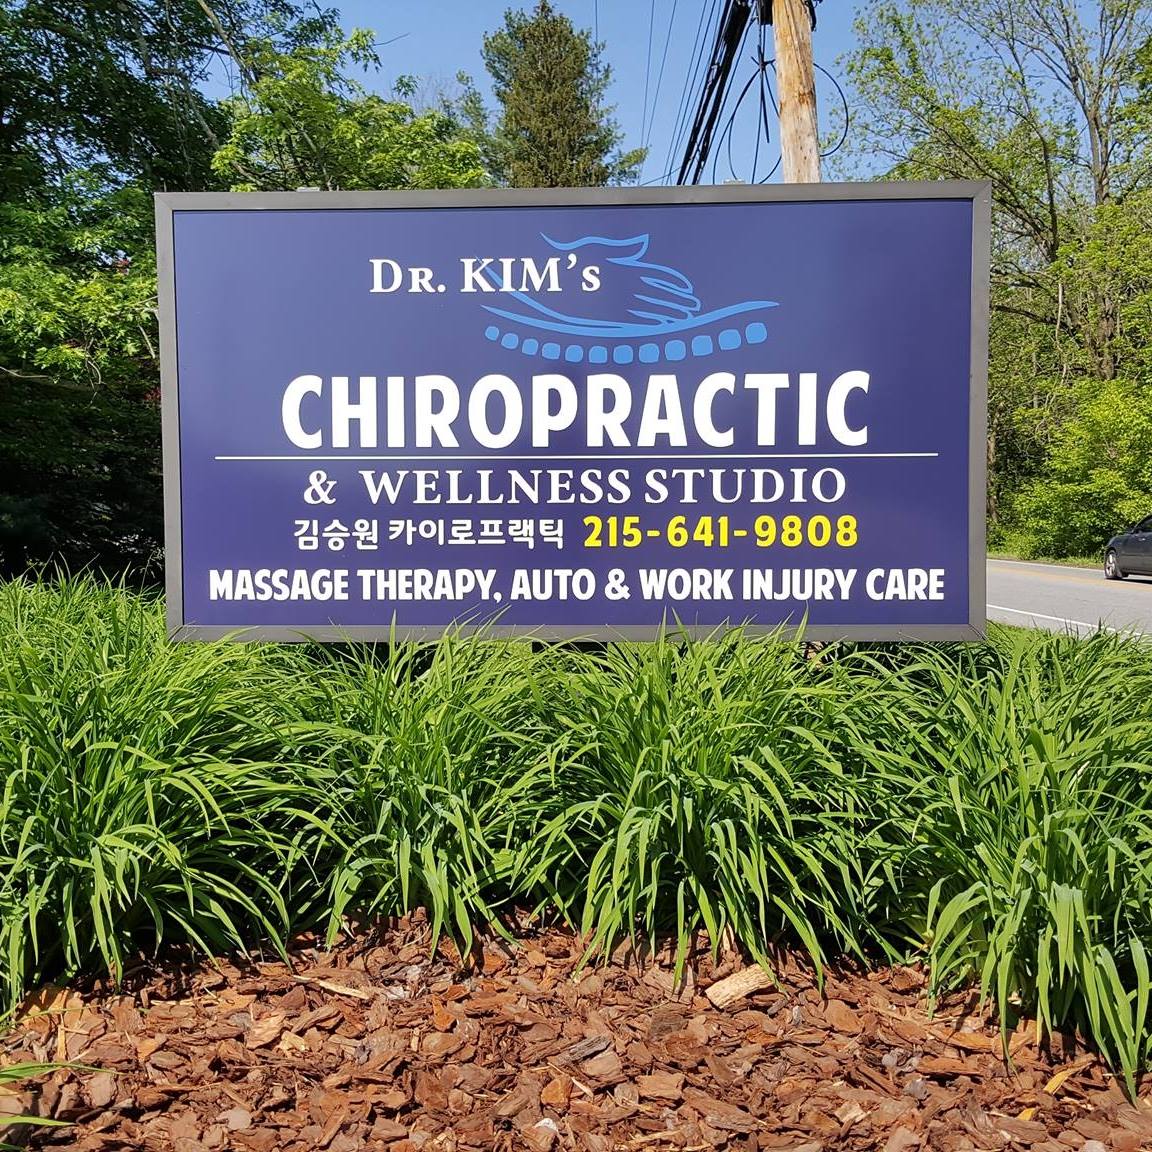 Dr. Kim's Chiropractic & Wellness Studio